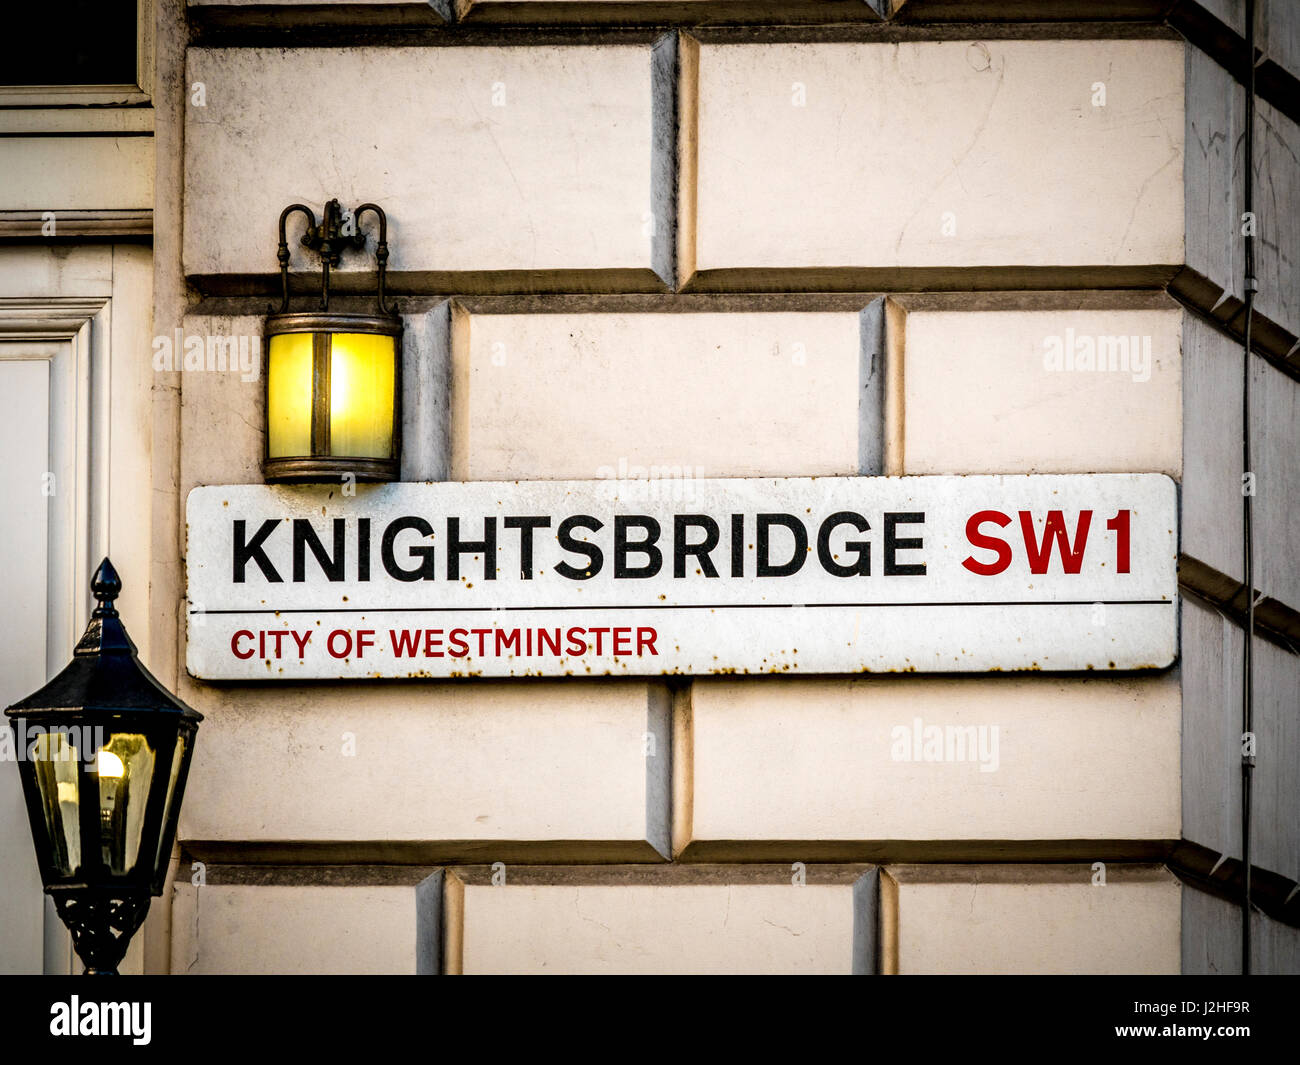 Knightsbridge SW1 street sign, Londres, Royaume-Uni. Banque D'Images